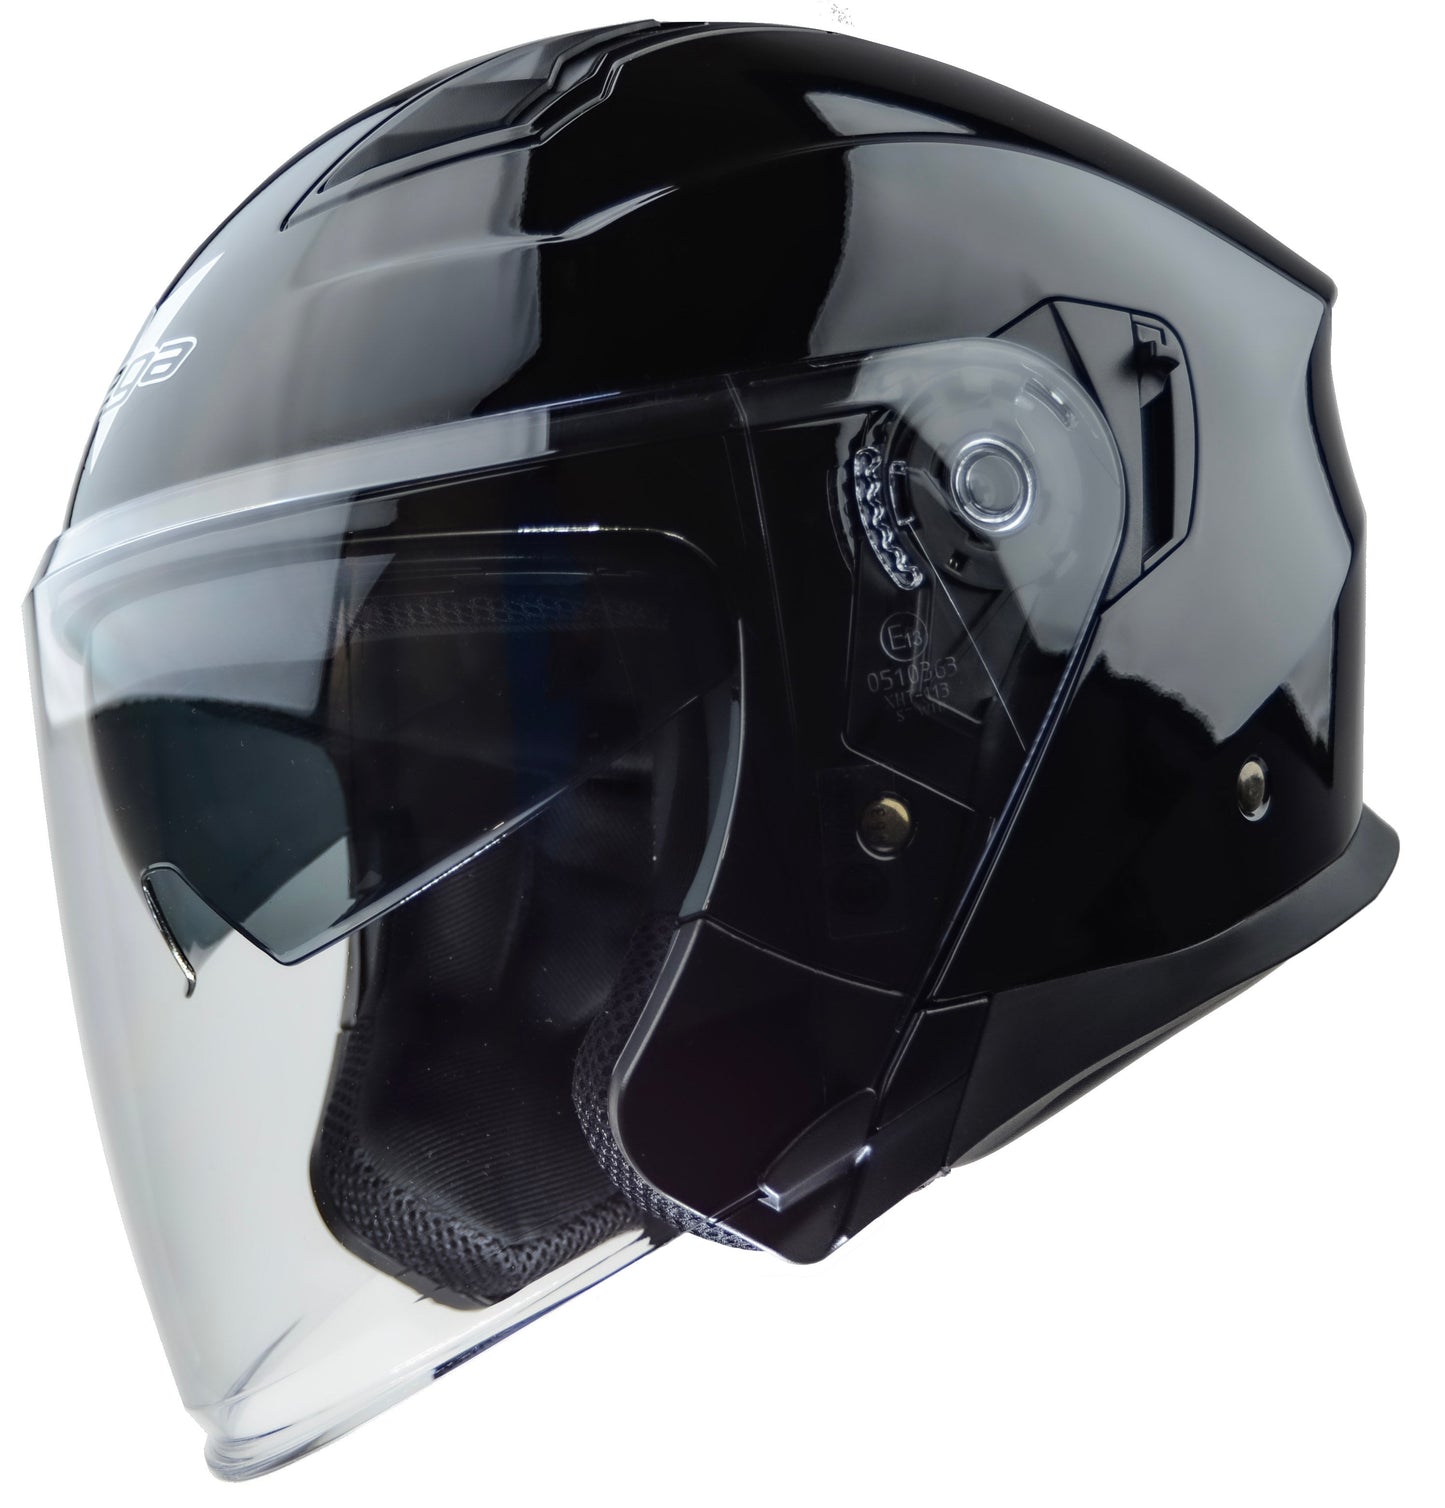 Vega Magna Touring Open Face Helmet - Gloss Silver